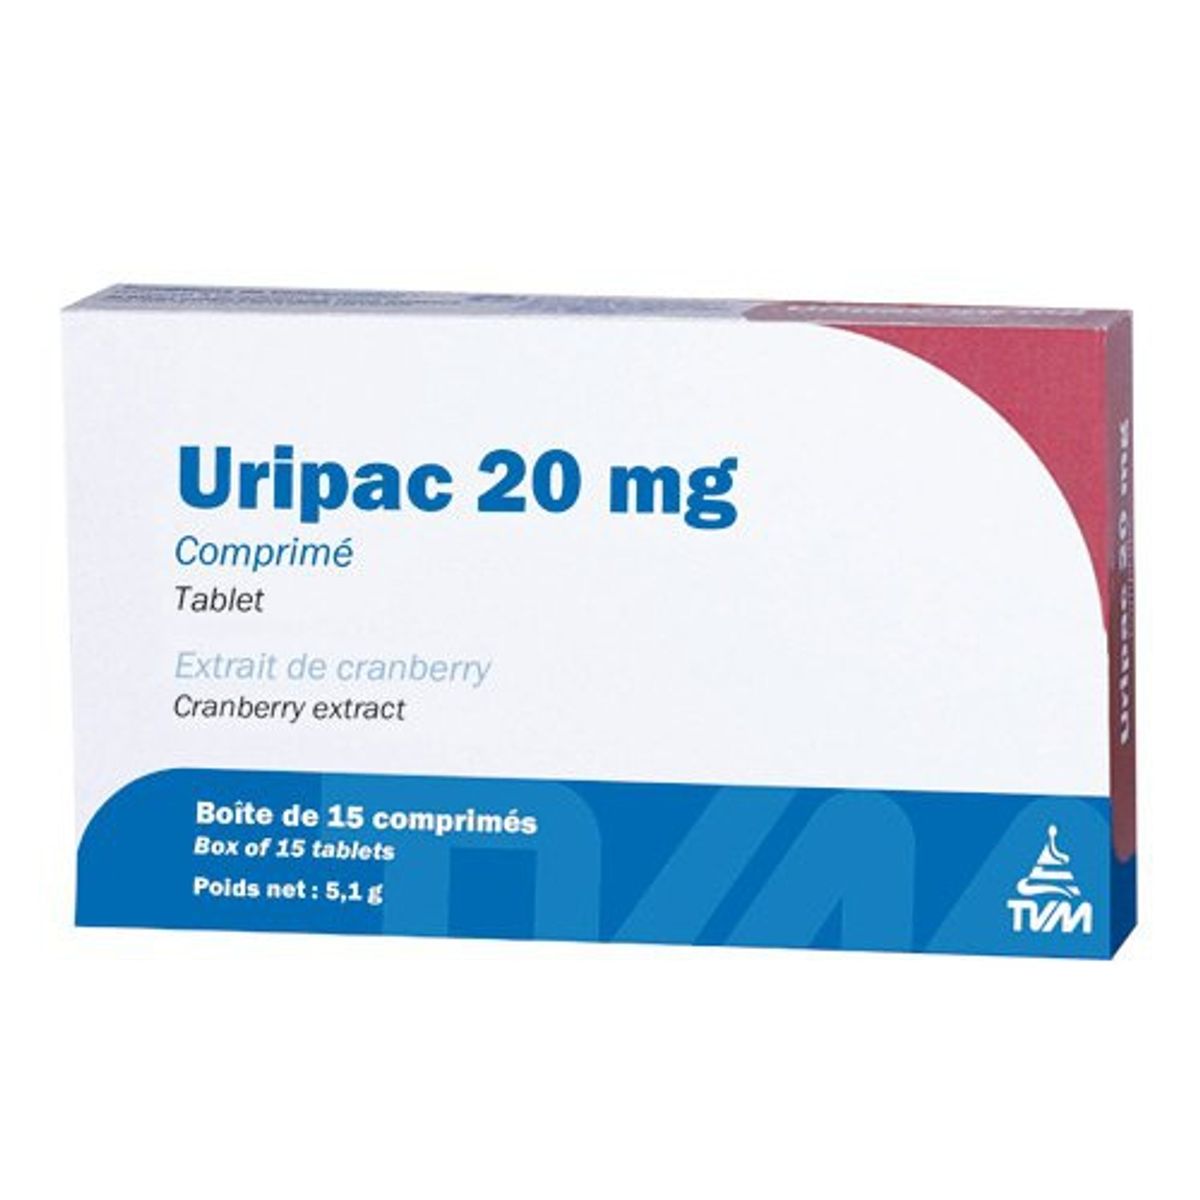 Uripac 20 mg - TVM